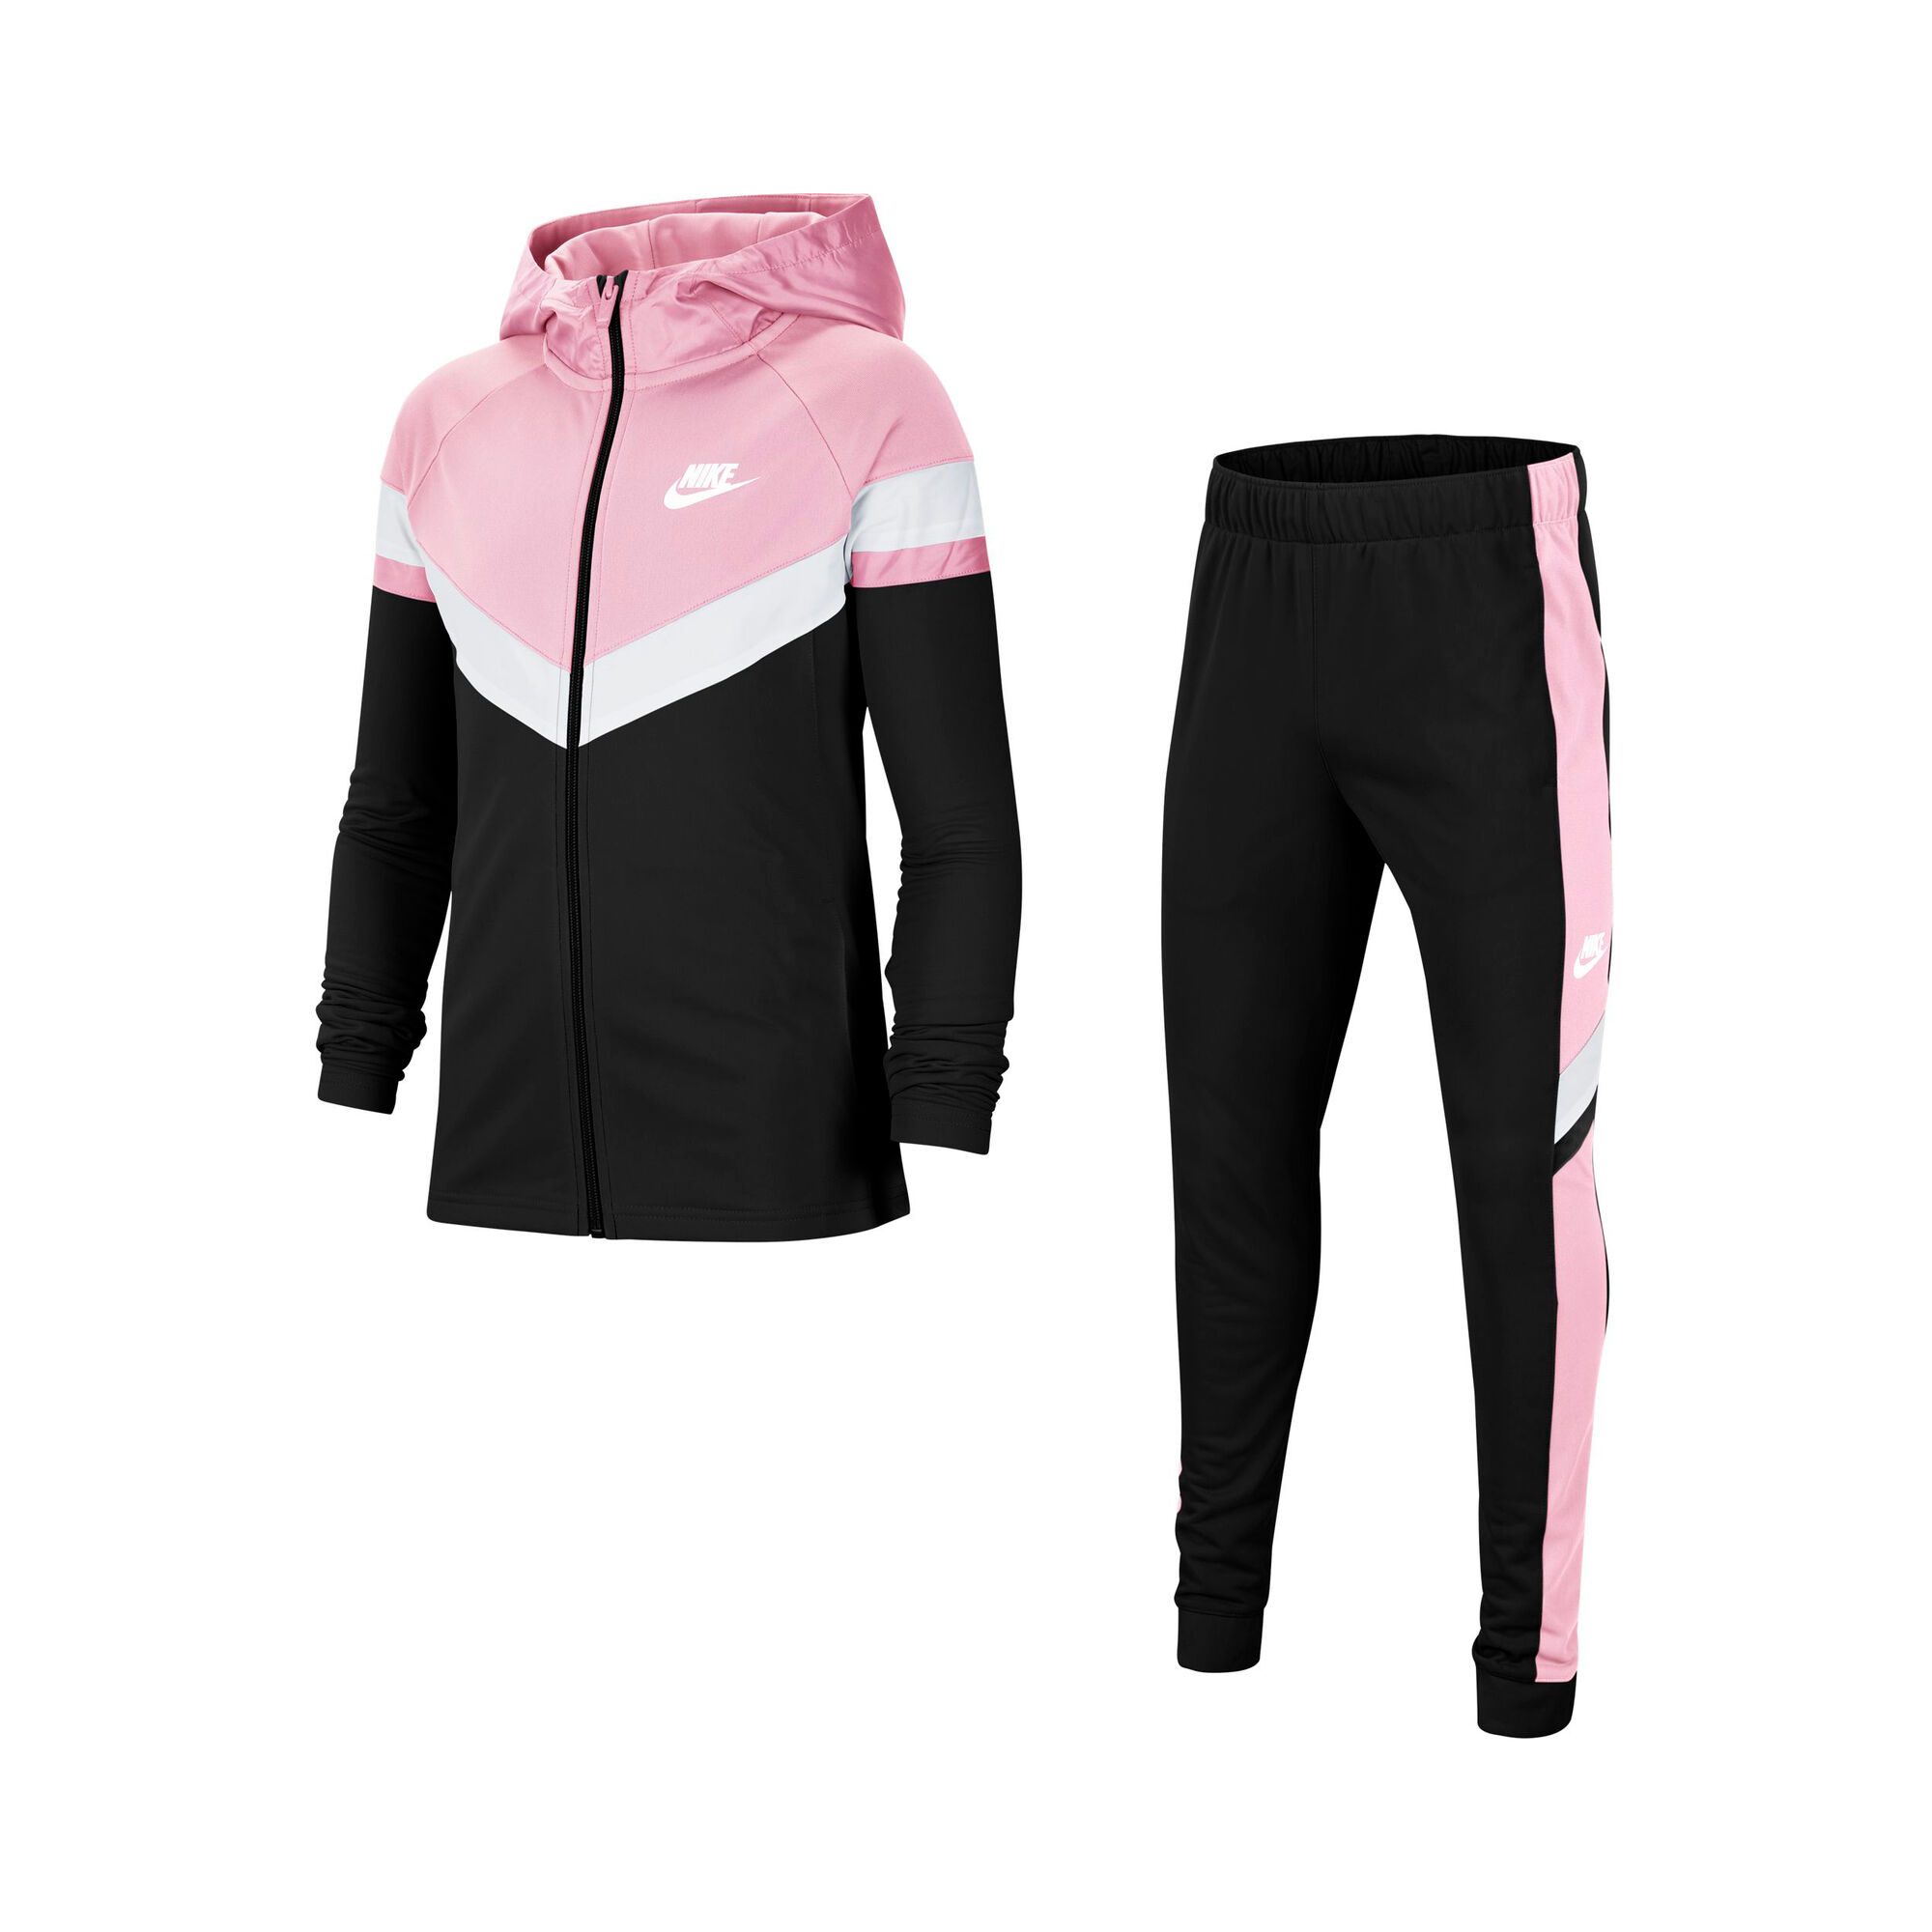 Nike Trainingspak - Zwart, Roze kopen | Tennis-Point